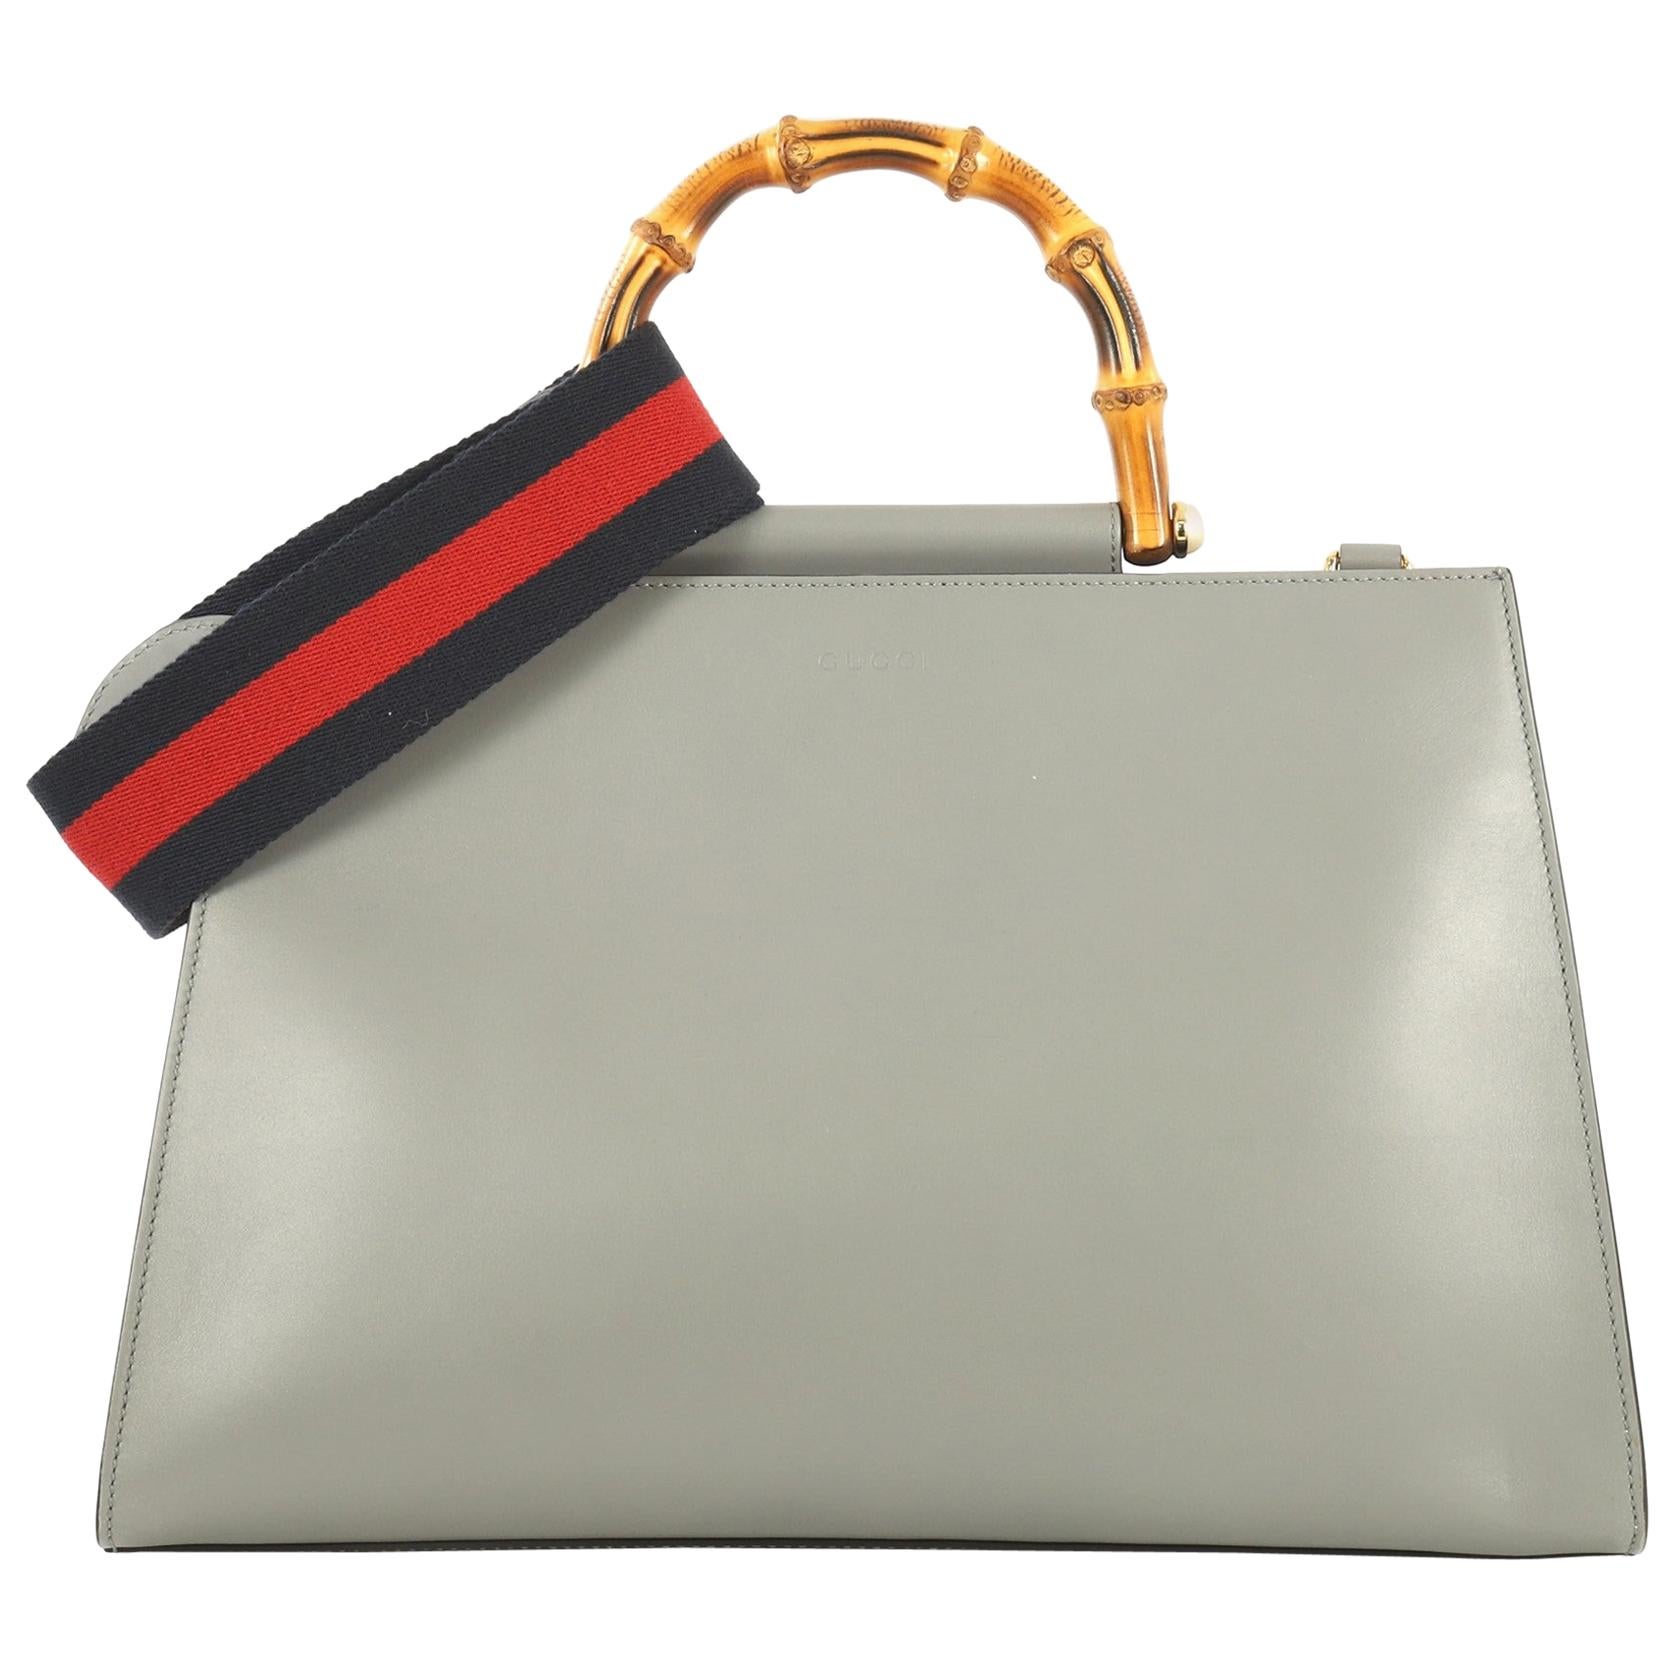  Gucci Nymphaea Top Handle Bag Leather Medium